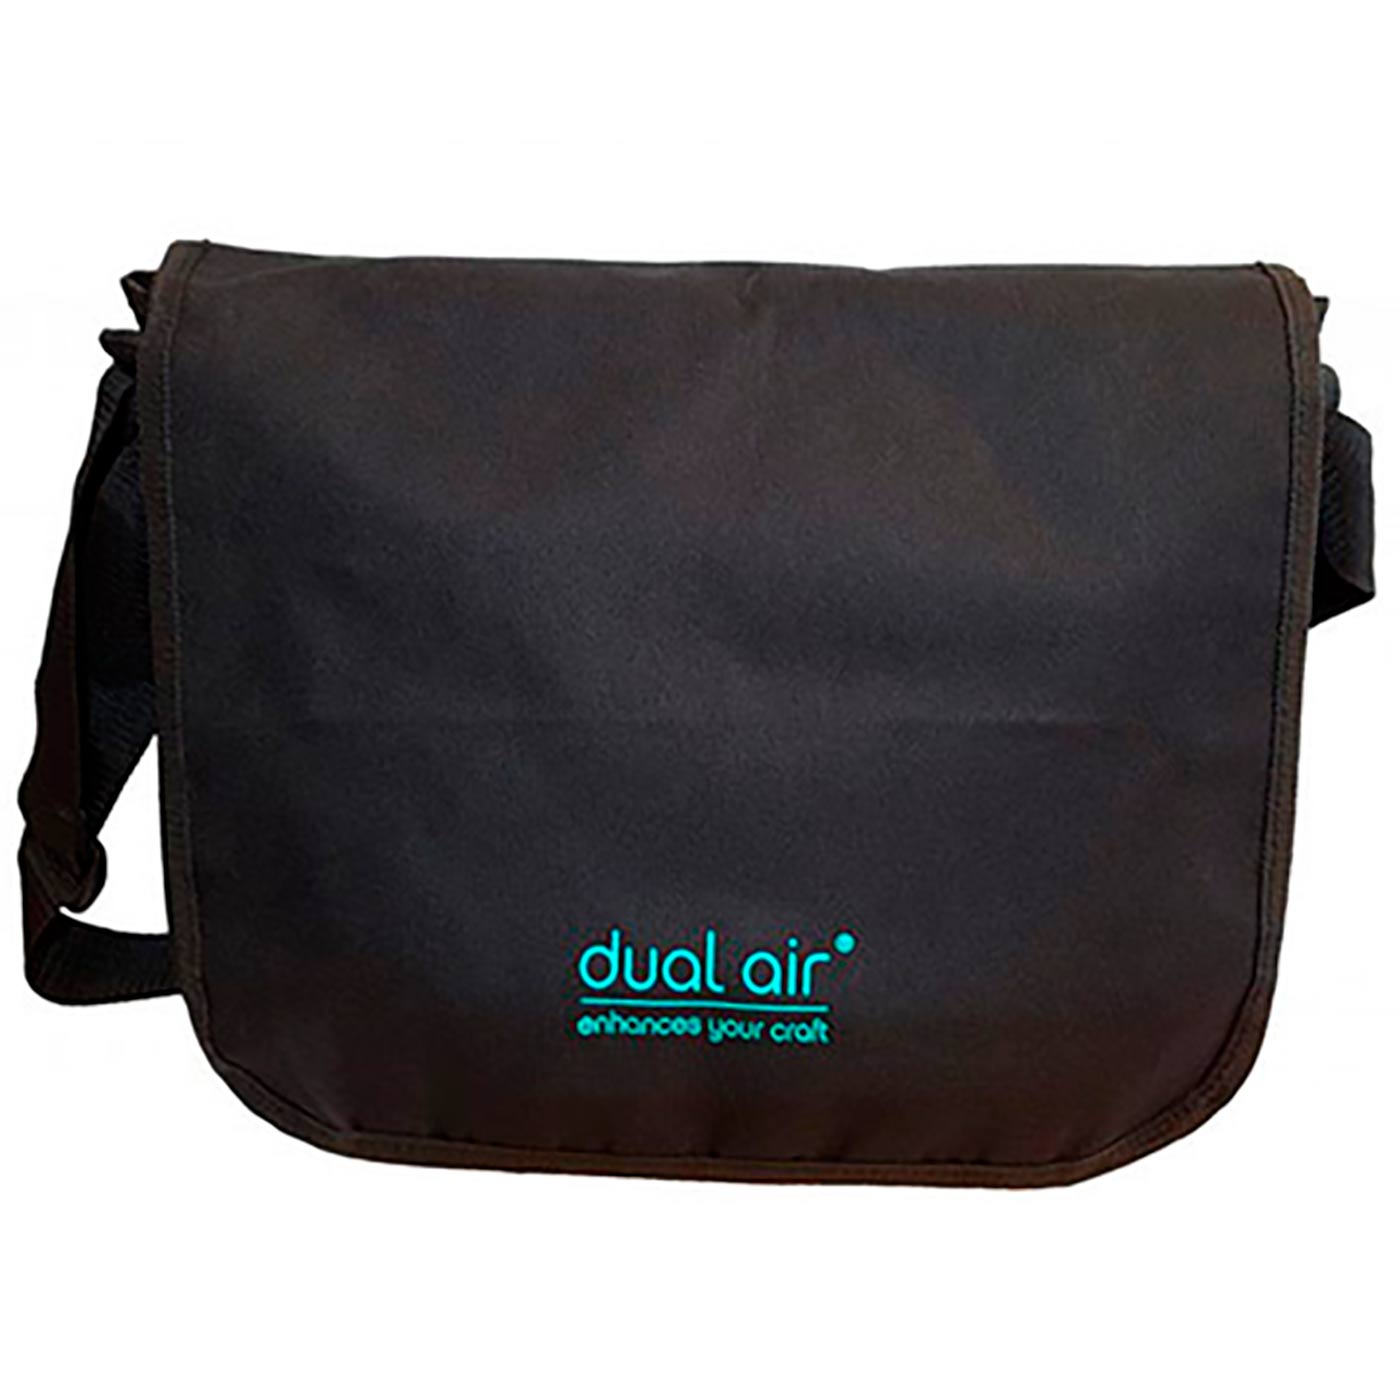 Dual Air Messenger Bag